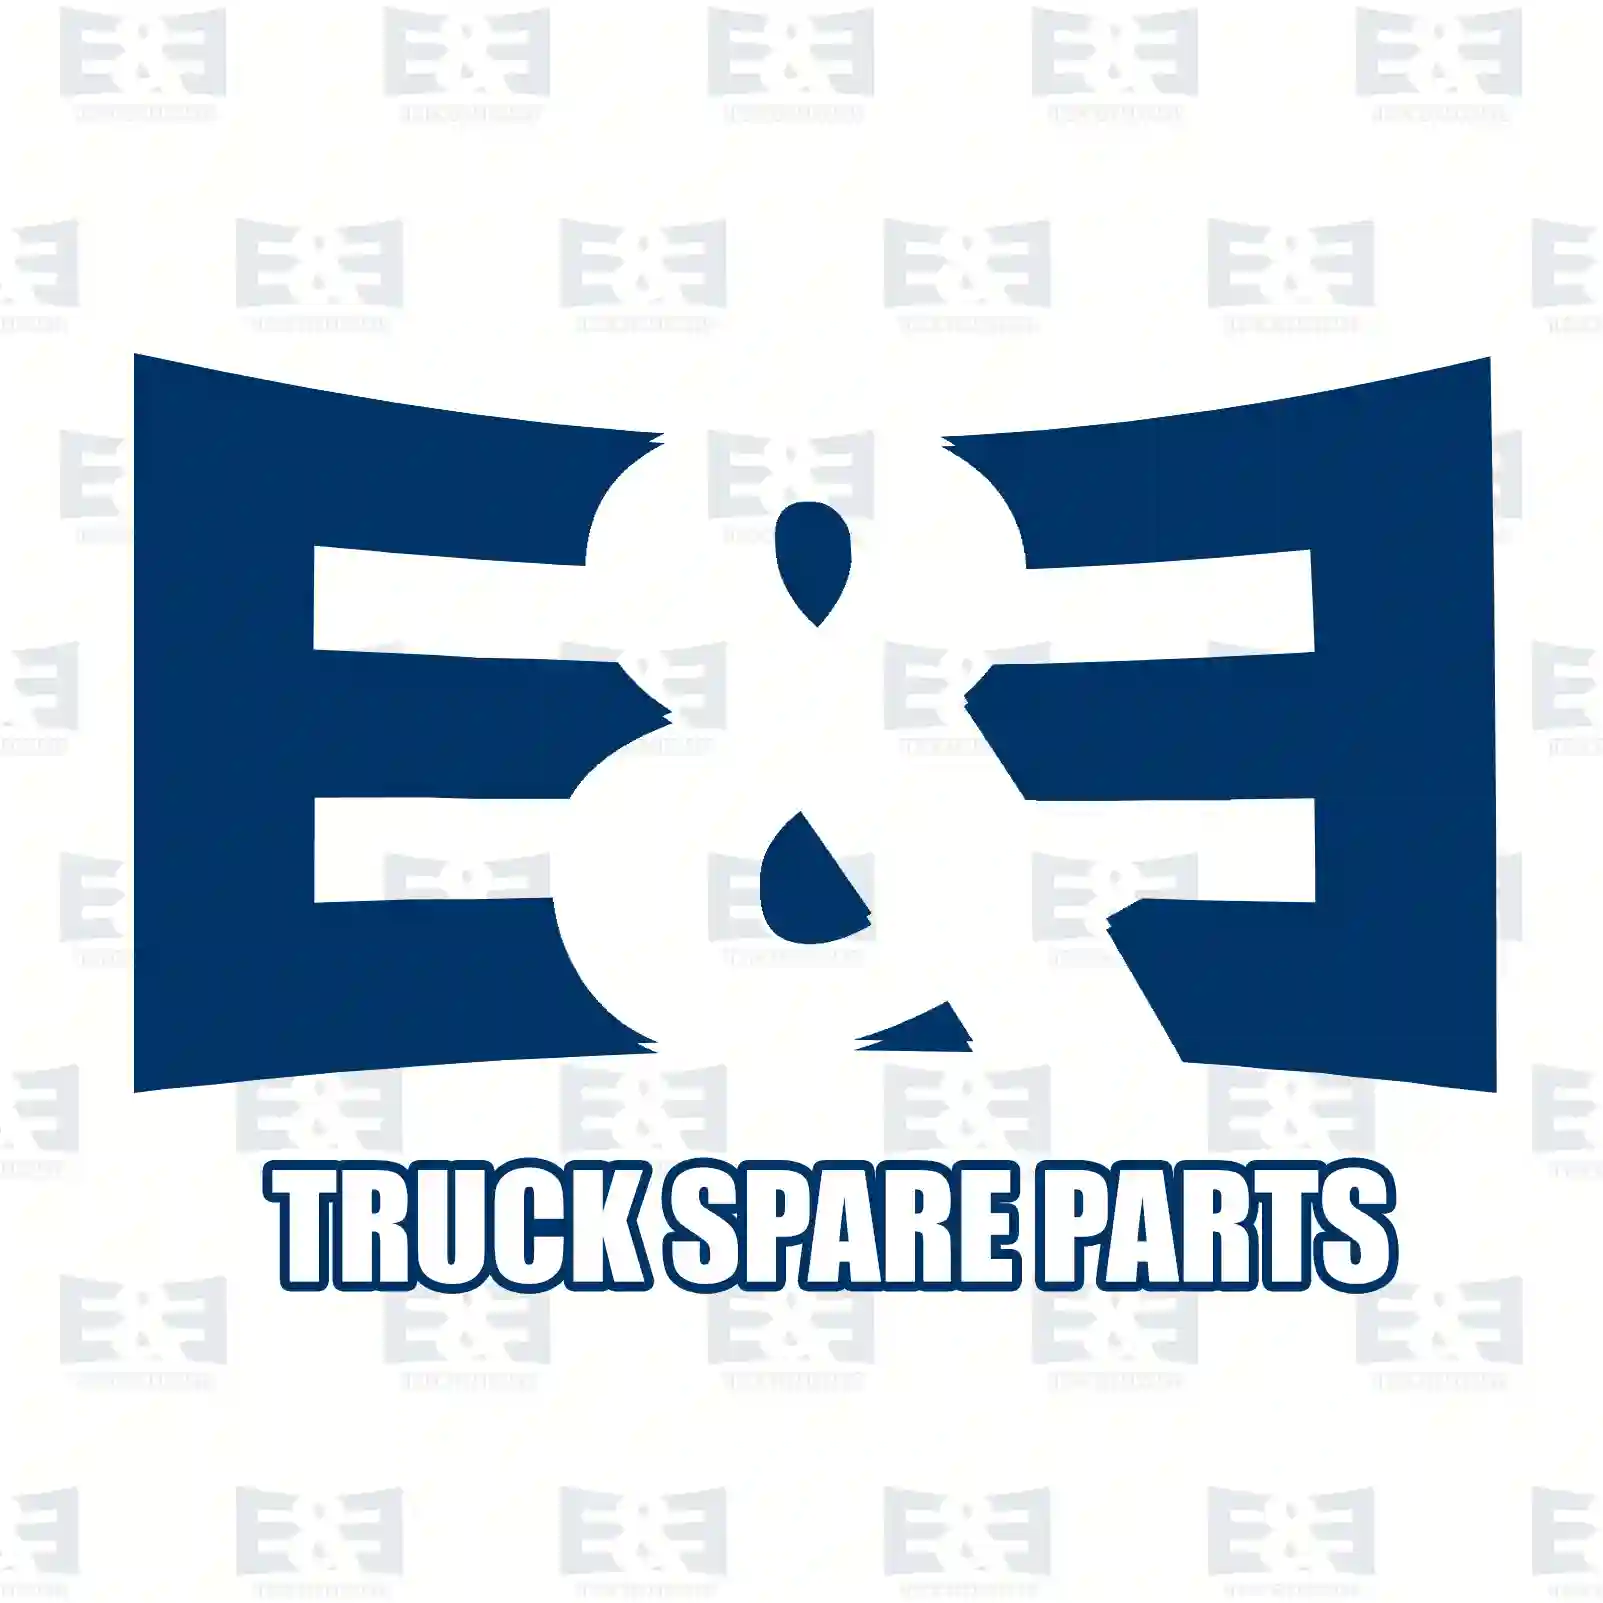 Engine mounting, 2E2208299, 242201, 272368, 532266 ||  2E2208299 E&E Truck Spare Parts | Truck Spare Parts, Auotomotive Spare Parts Engine mounting, 2E2208299, 242201, 272368, 532266 ||  2E2208299 E&E Truck Spare Parts | Truck Spare Parts, Auotomotive Spare Parts